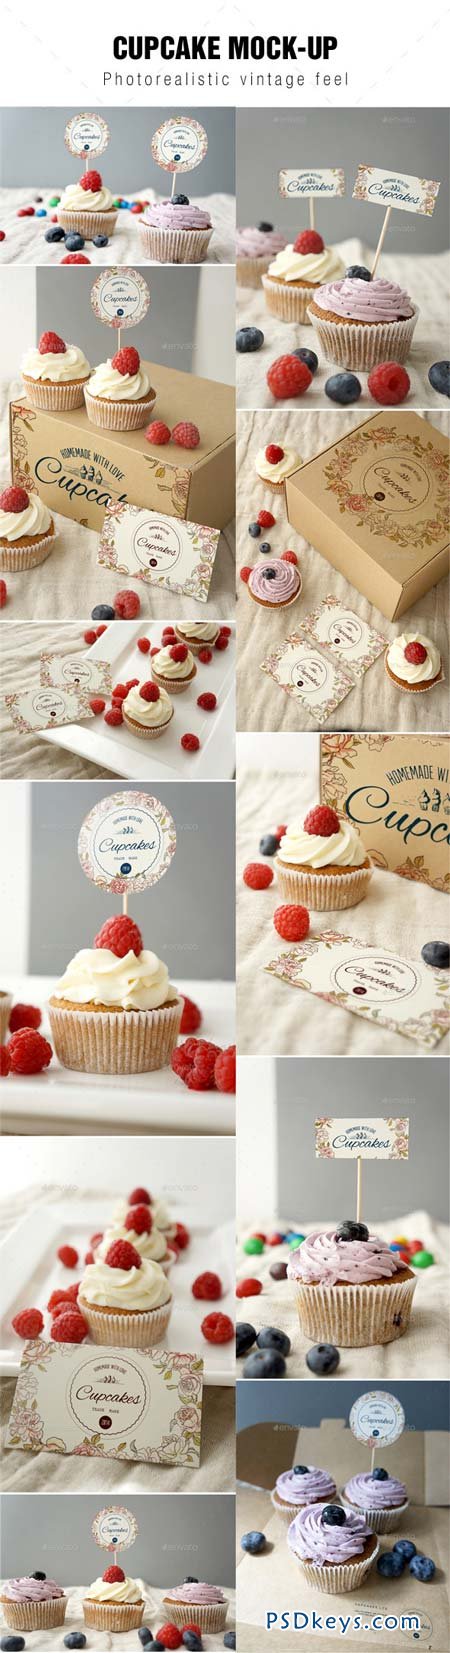 Download Cupcake Mockup 9206104 » Free Download Photoshop Vector ...